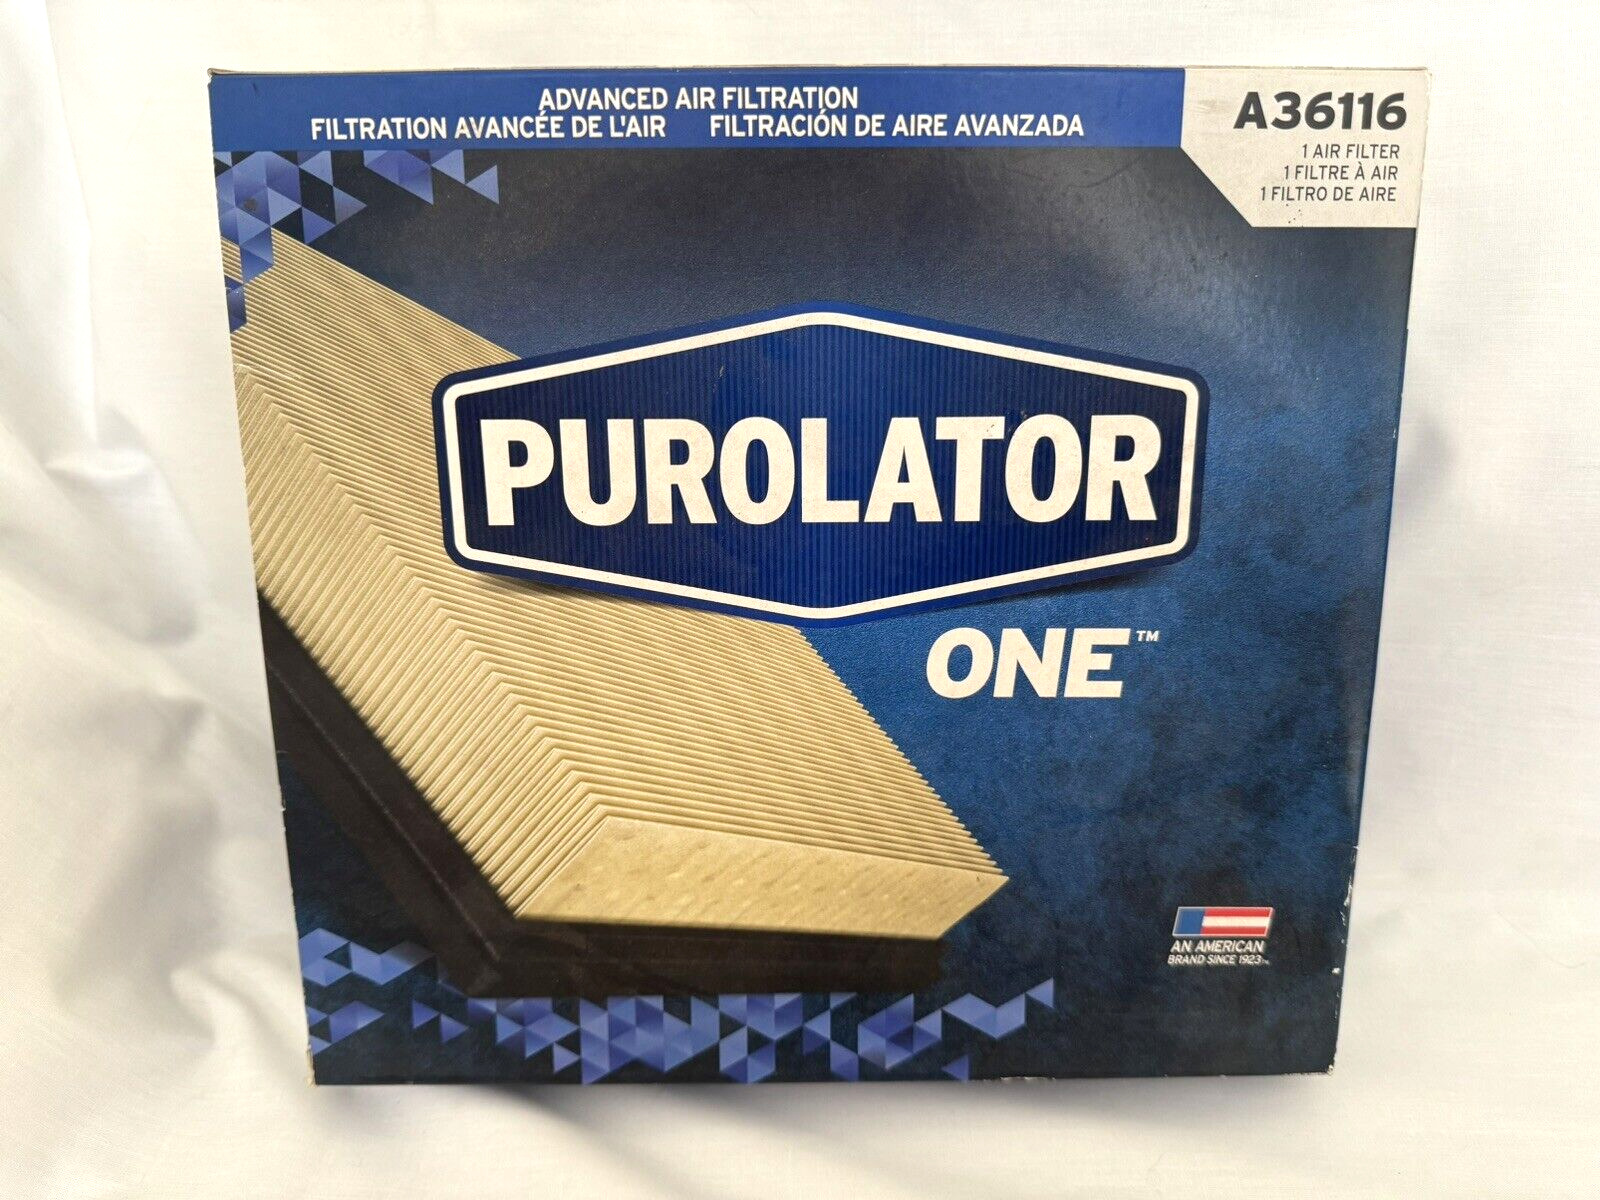 Air Filter Purolator A36116 - New and in the original box